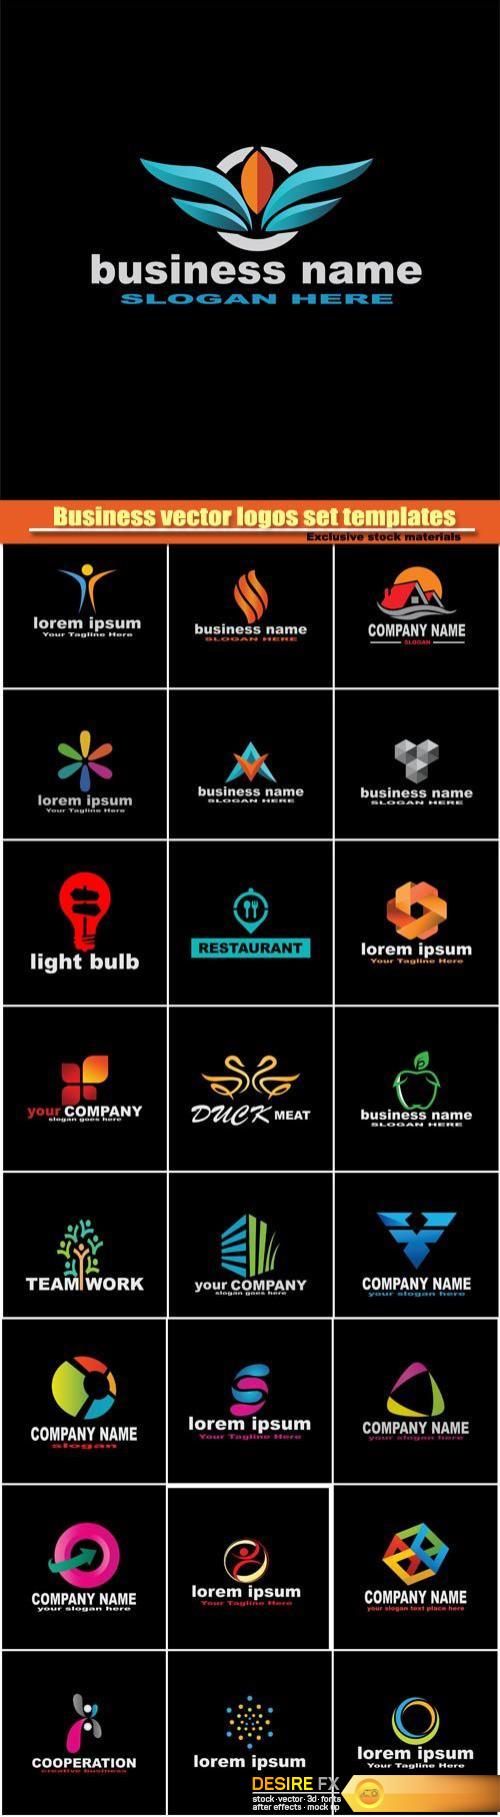 Business vector logos set templates